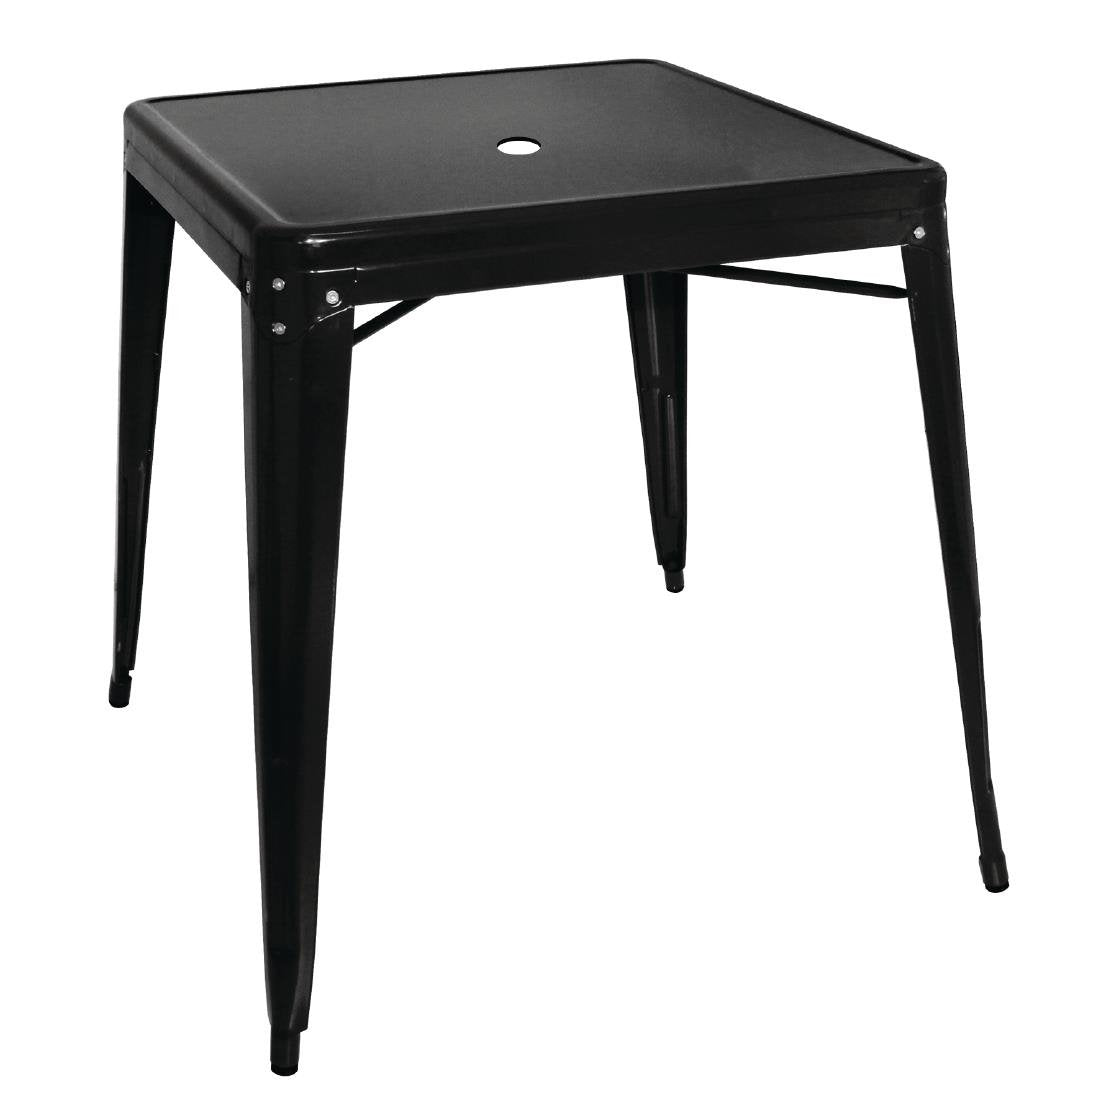 Bolero Bistro Steel Square Table Black 668mm (Single) GC867 JD Catering Equipment Solutions Ltd